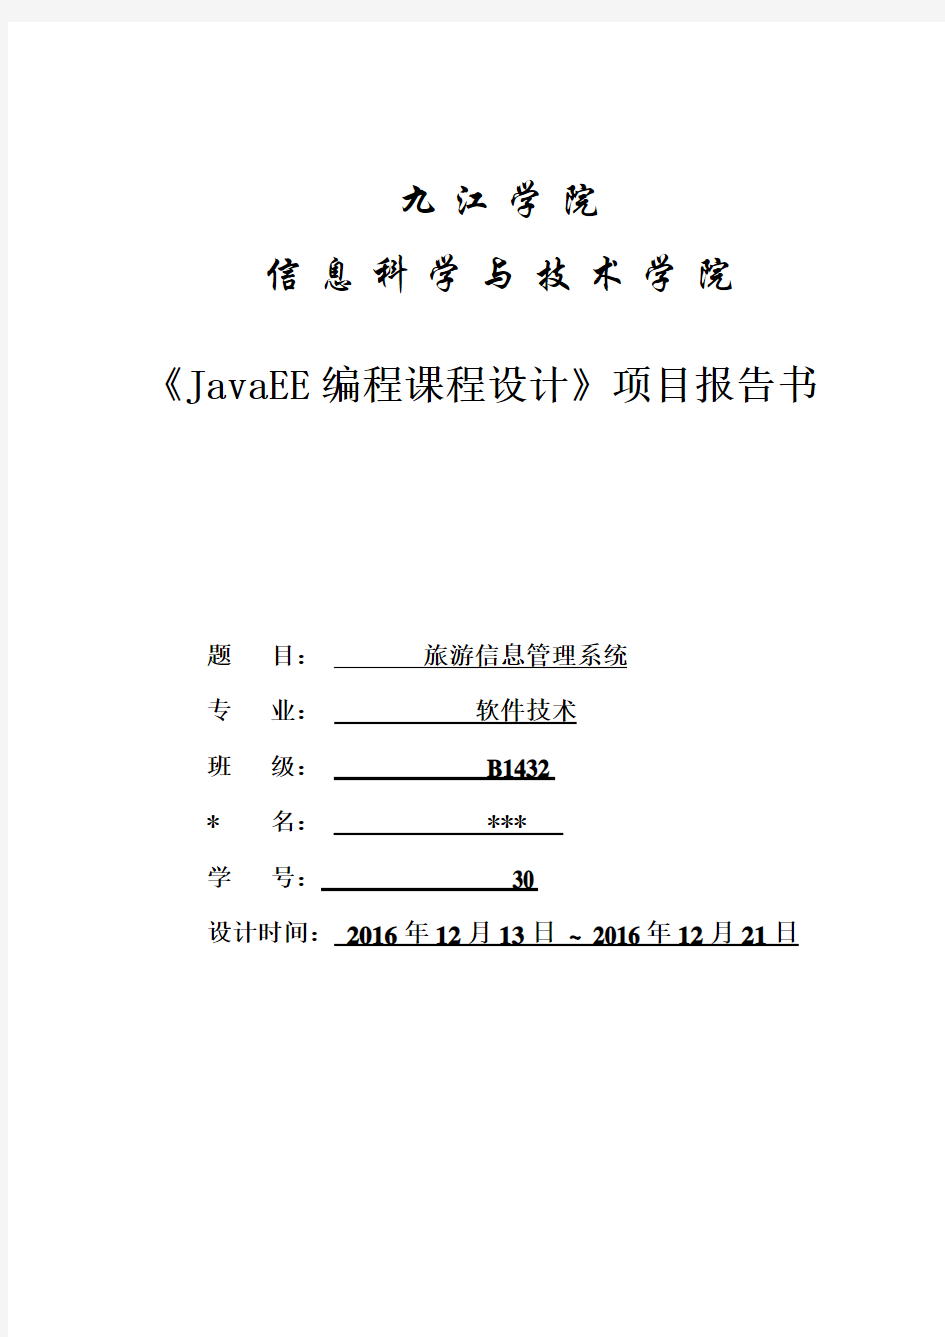 《JavaEE编程课程设计》期末项目报告书